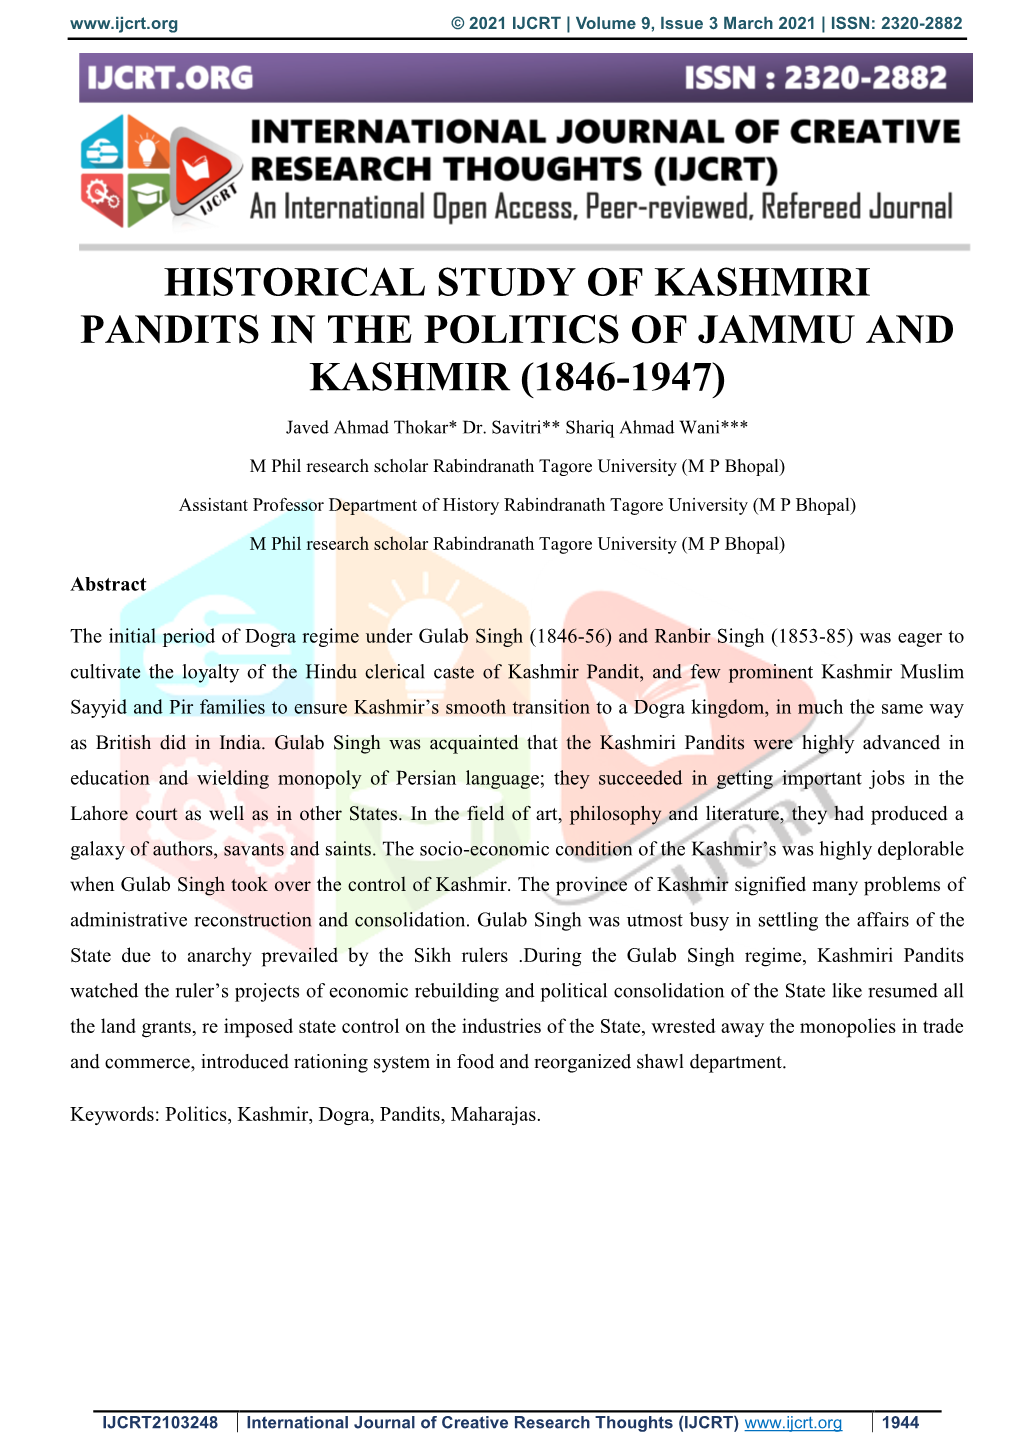 Historical Study of Kashmiri Pandits in the Politics of Jammu and Kashmir (1846-1947)